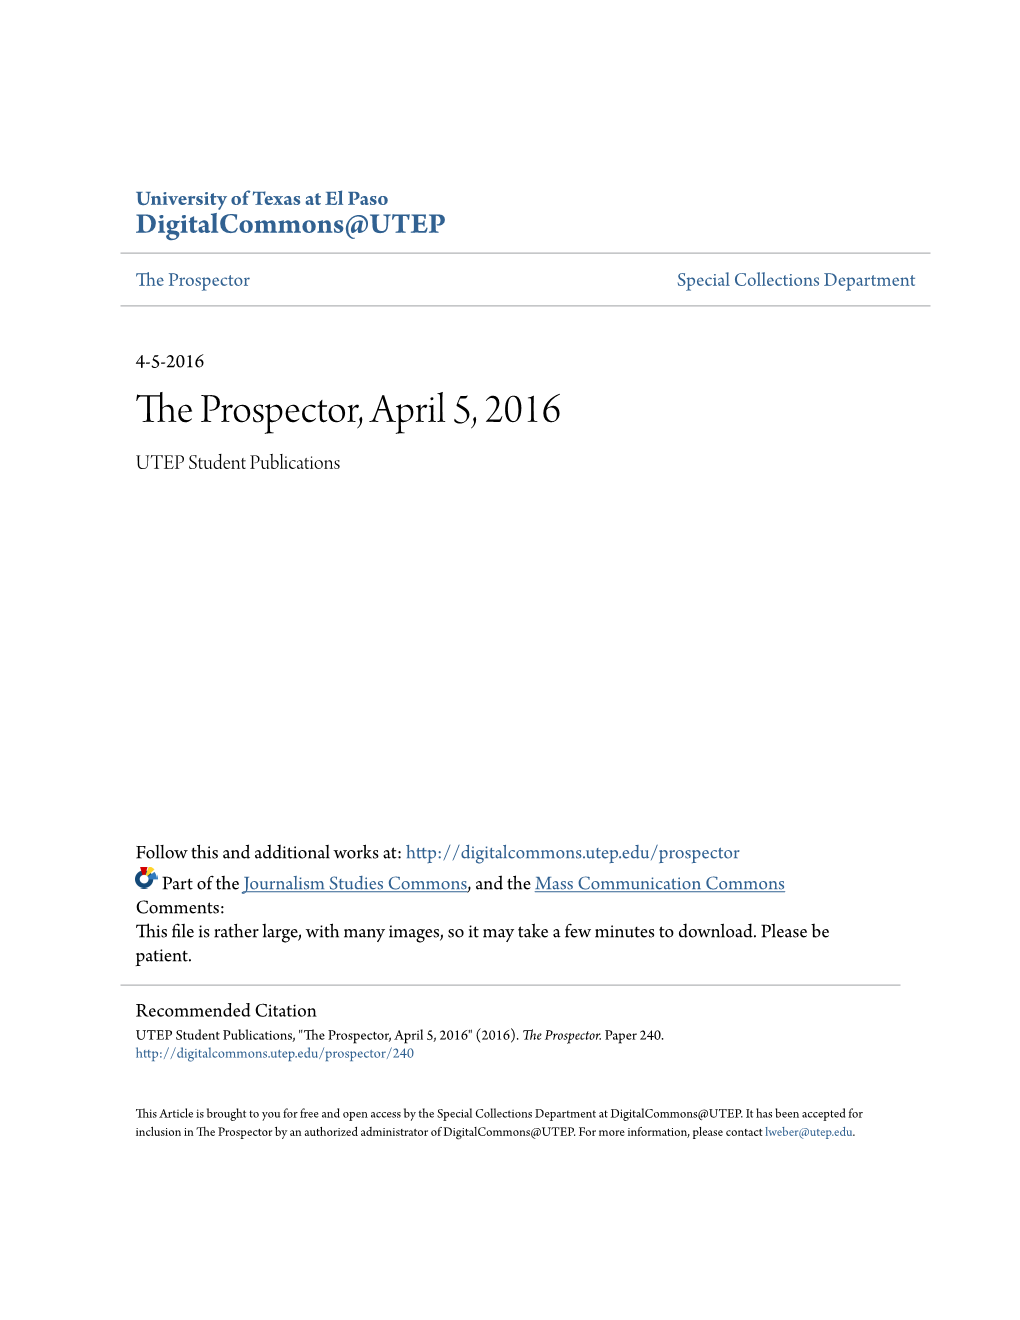 The Prospector, April 5, 2016